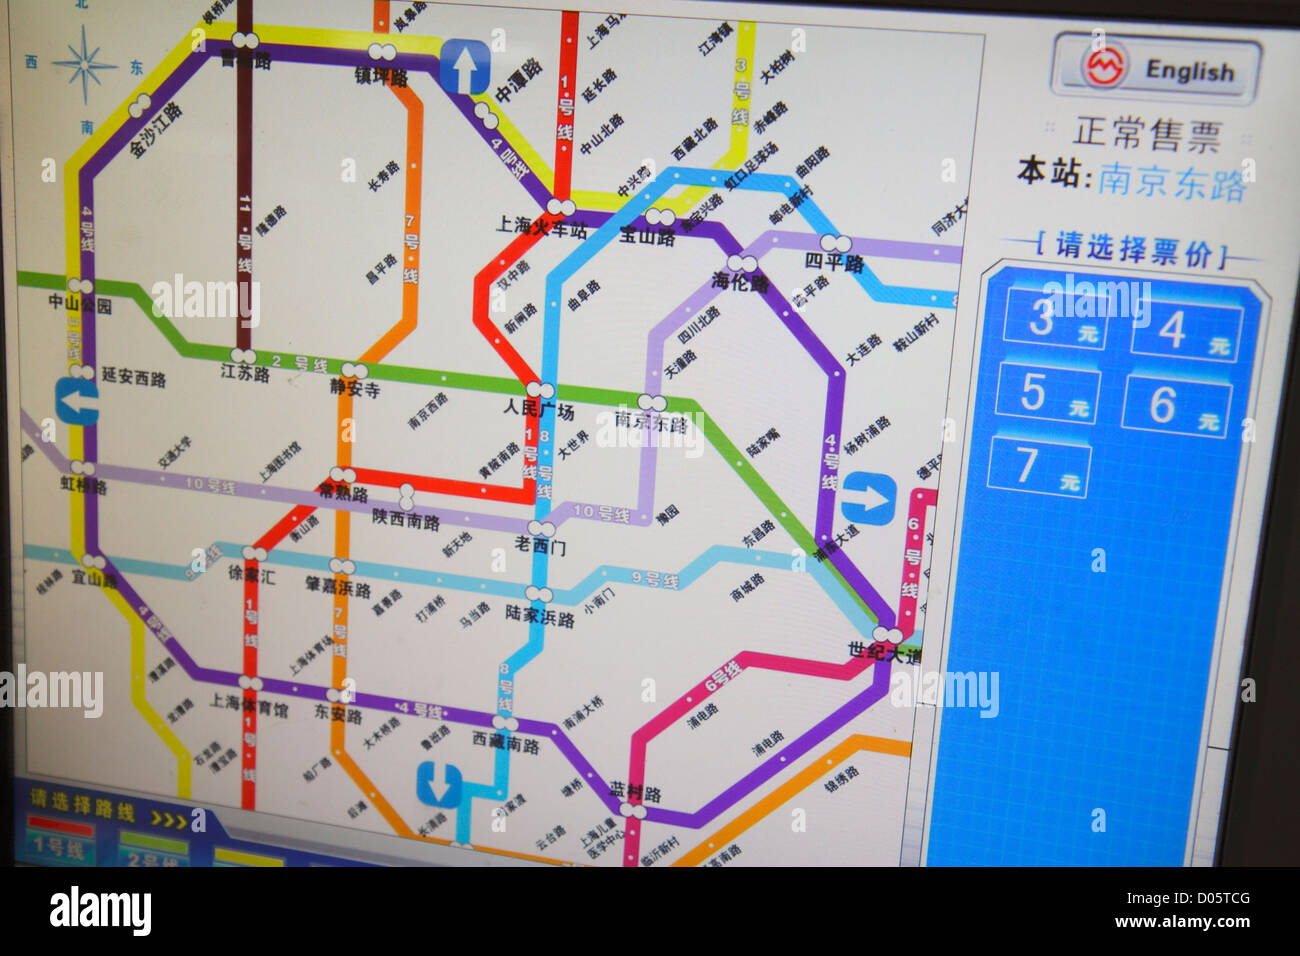 Shanghai China,Chinese Huangpu District,East Nanjing Road Metro Station,subway,train,train,Line 2 10,Mandarin,hanzi,characters,symbols,highway Route m Stock Photo